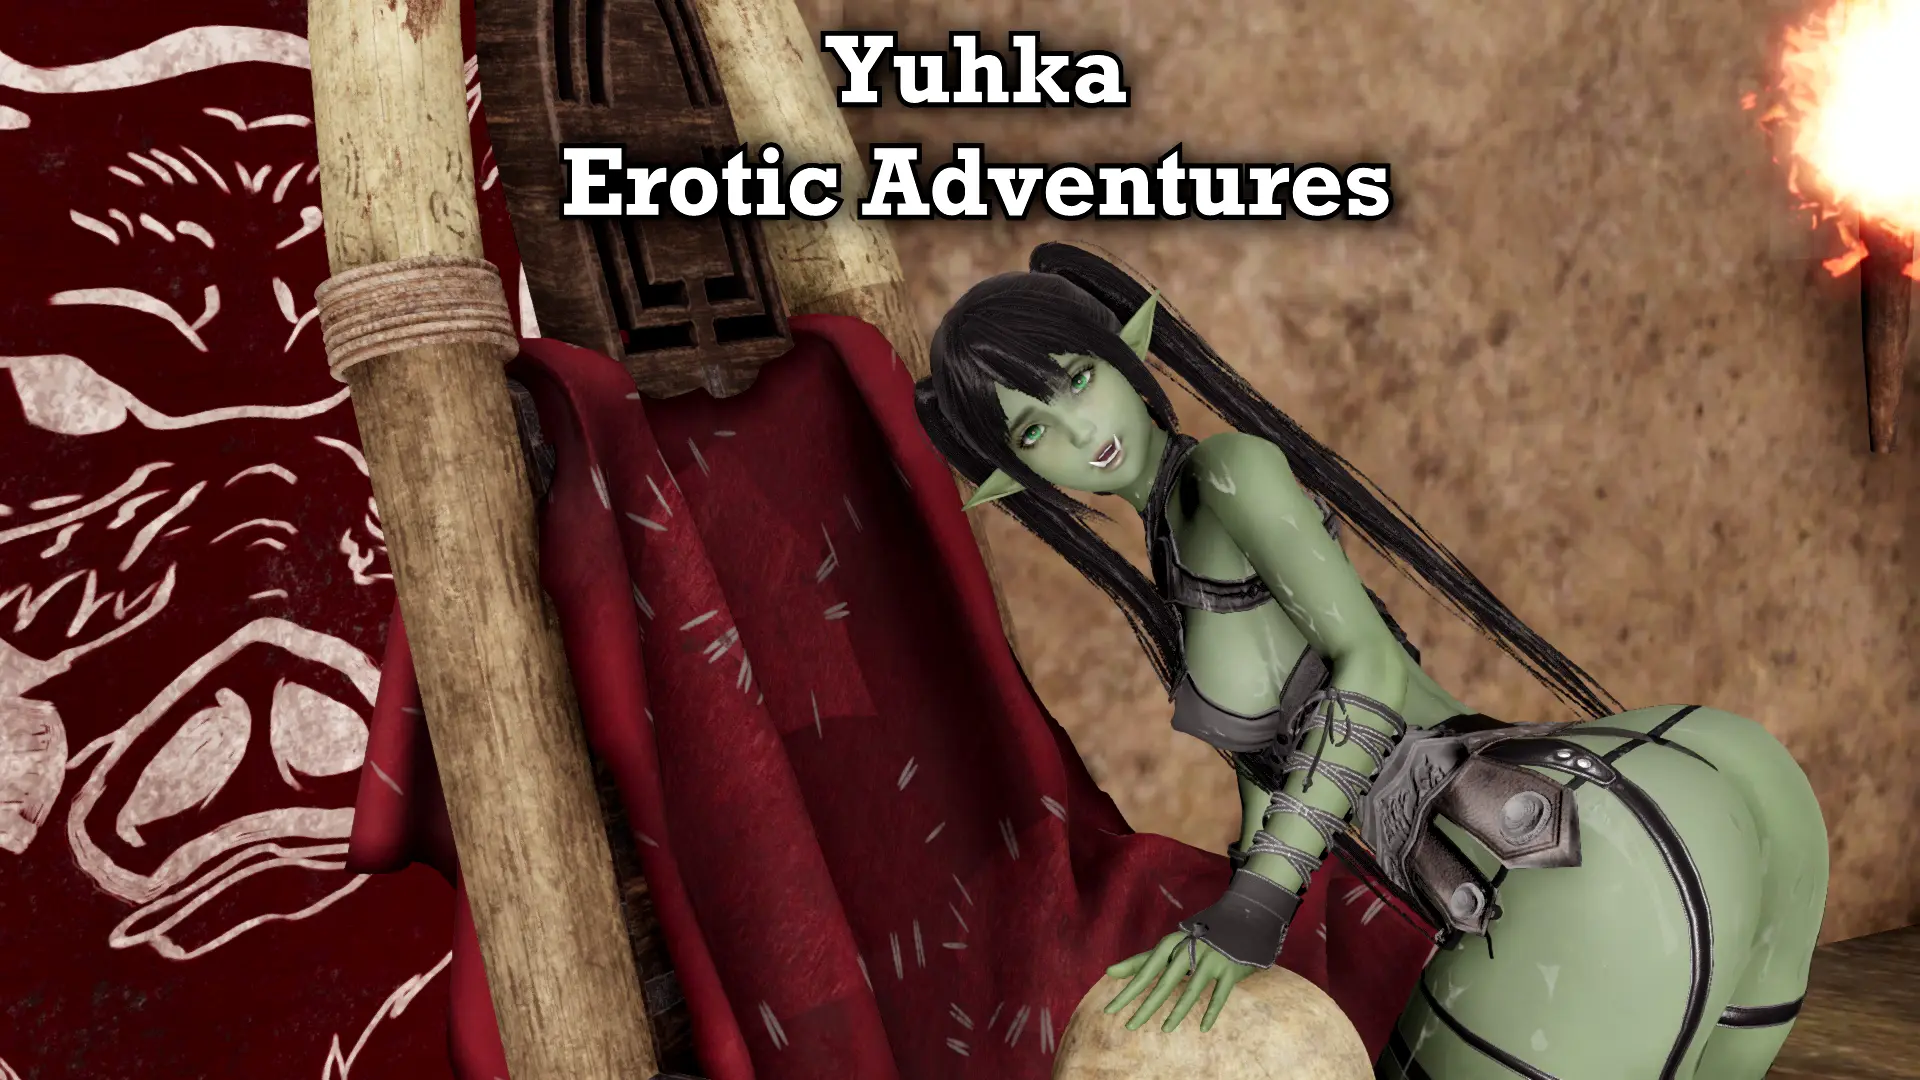 Yuhka Erotic Adventures main image